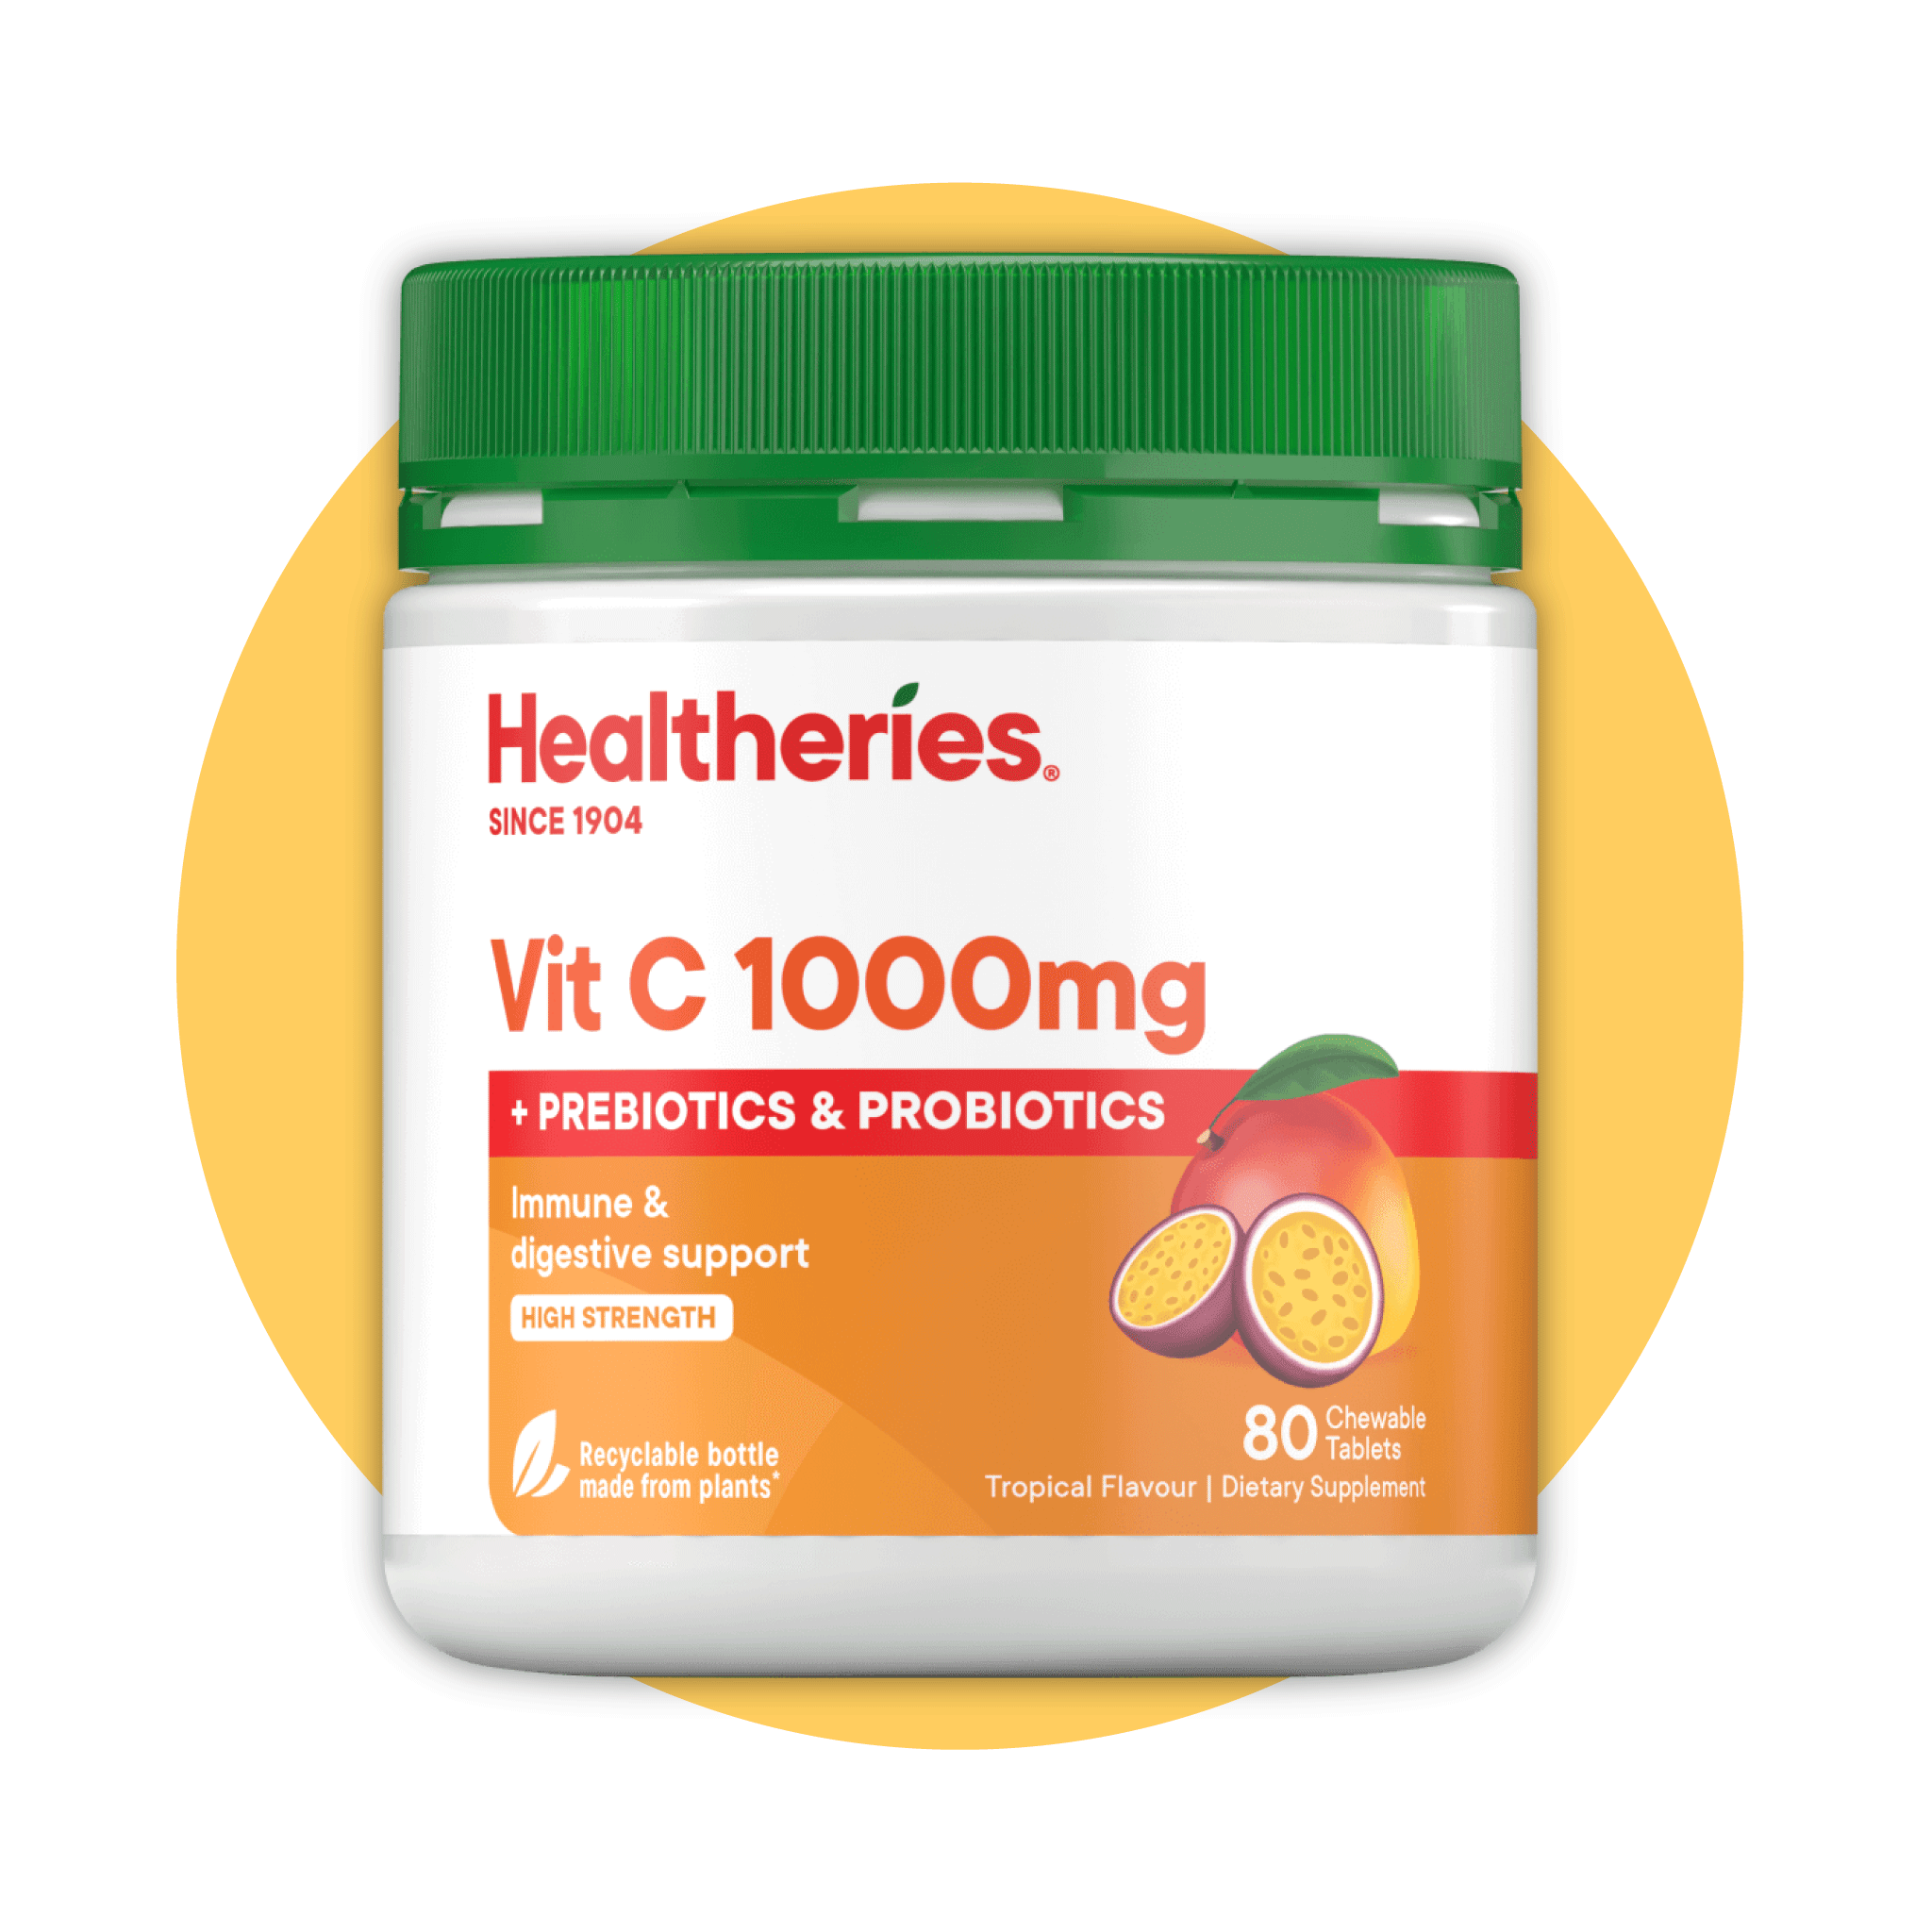 Healtheries Vit C 1000mg With Prebiotics & Probiotics 80s - Healtheries Hong Kong